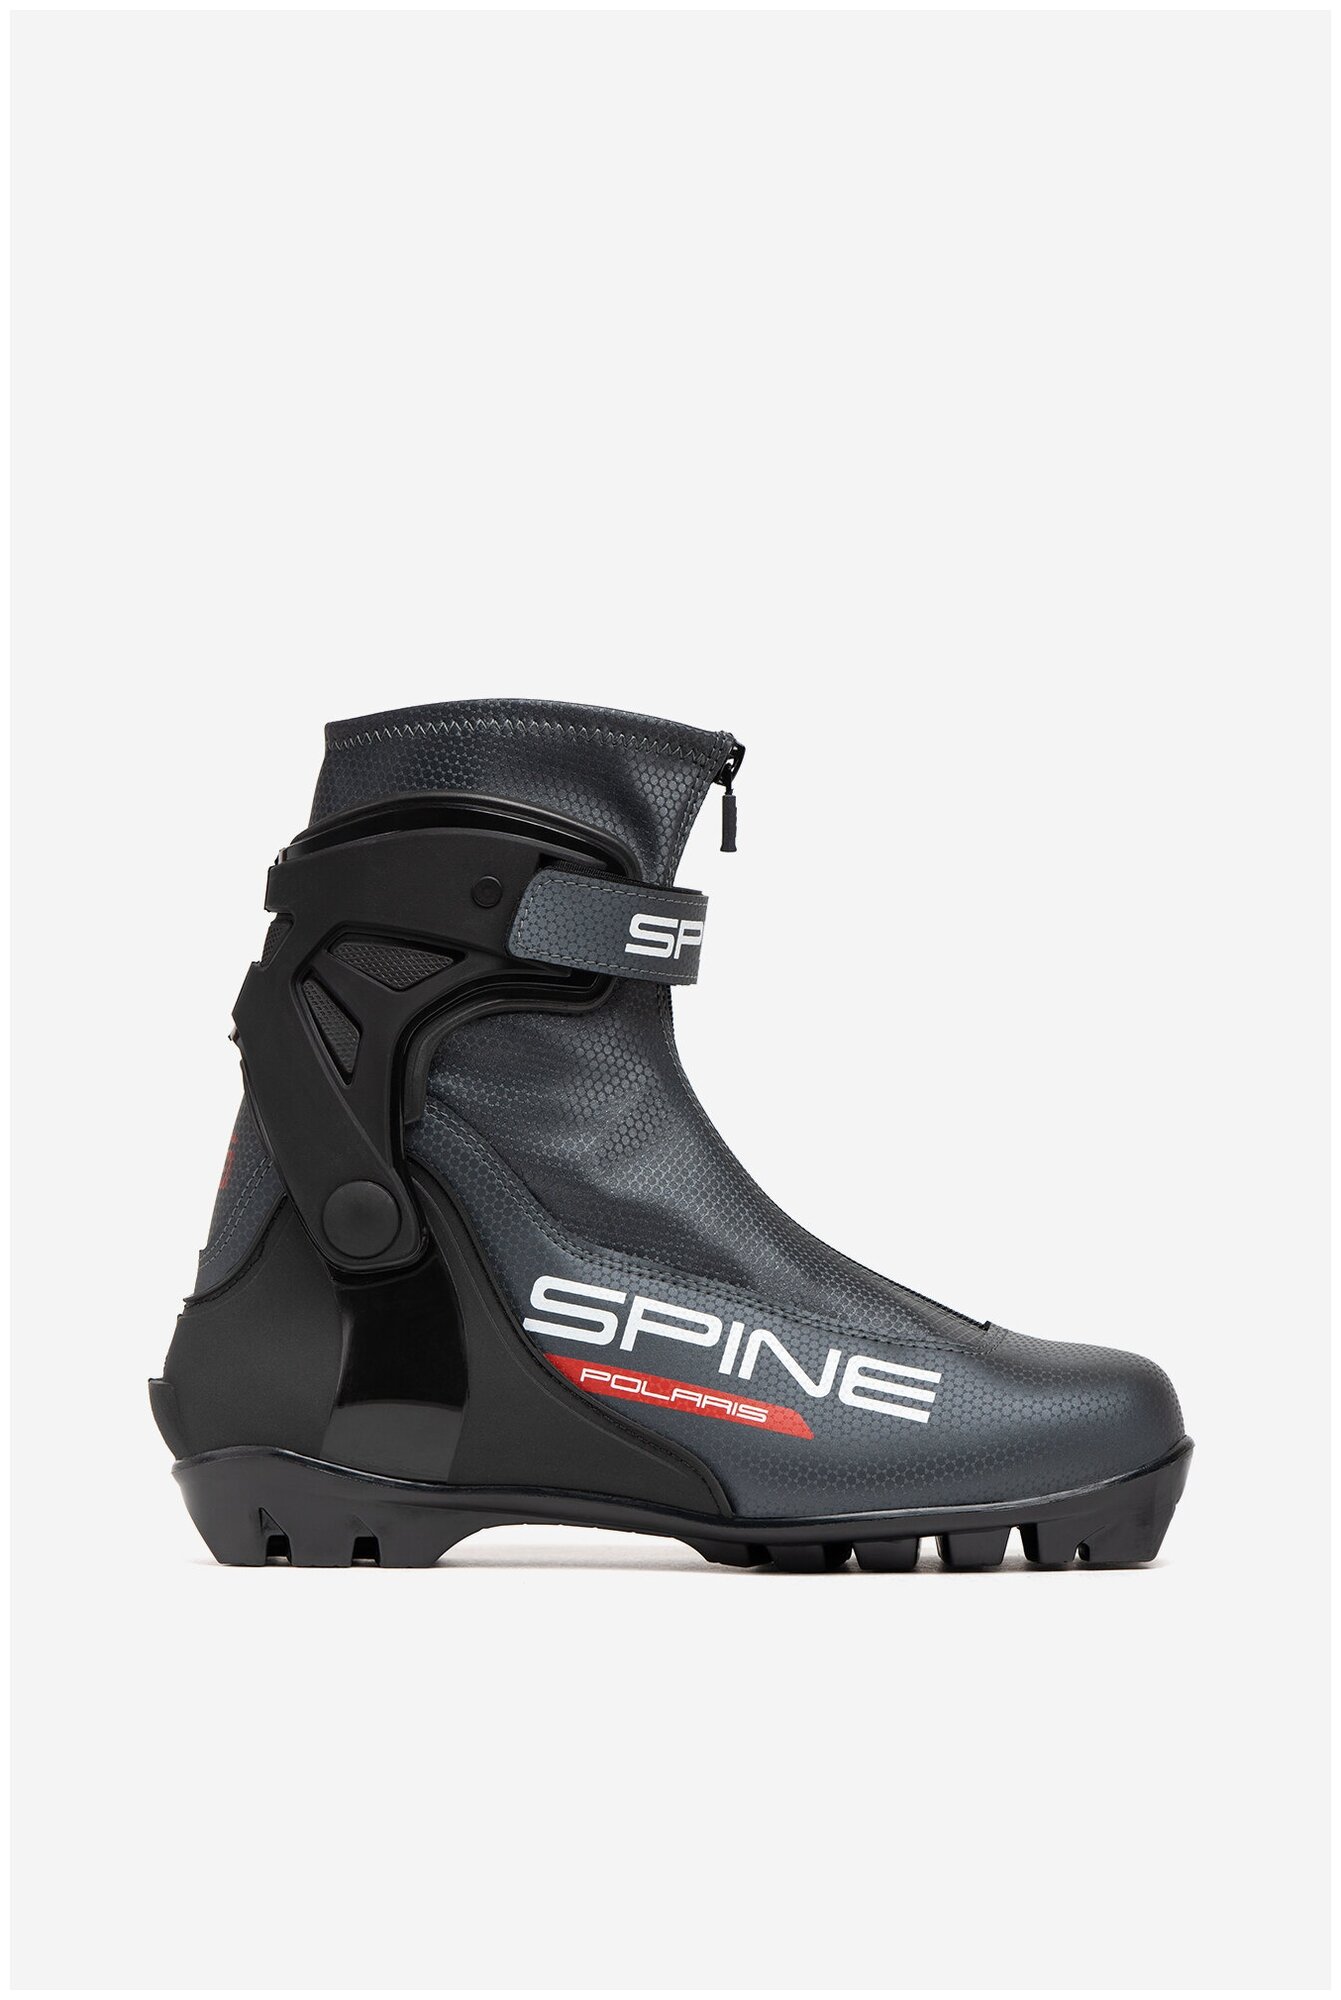 Лыжные ботинки Spine Polaris 85-22 NNN (р.39)